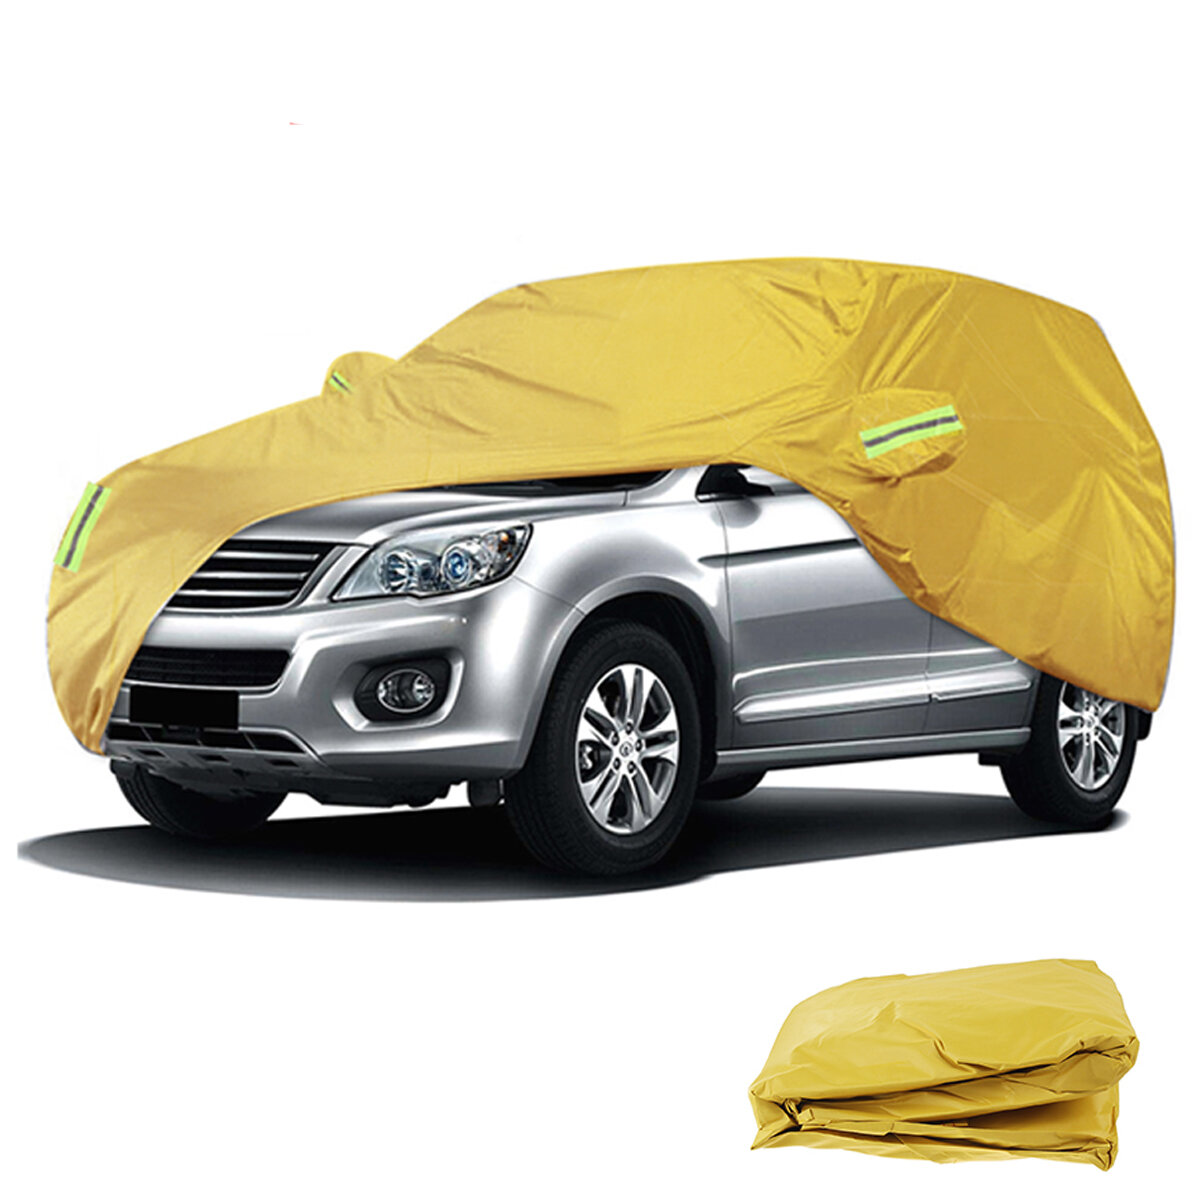 Full SUV Car Cover Waterproof In Outdoor Sun UV Snow Rain Dust Resistant